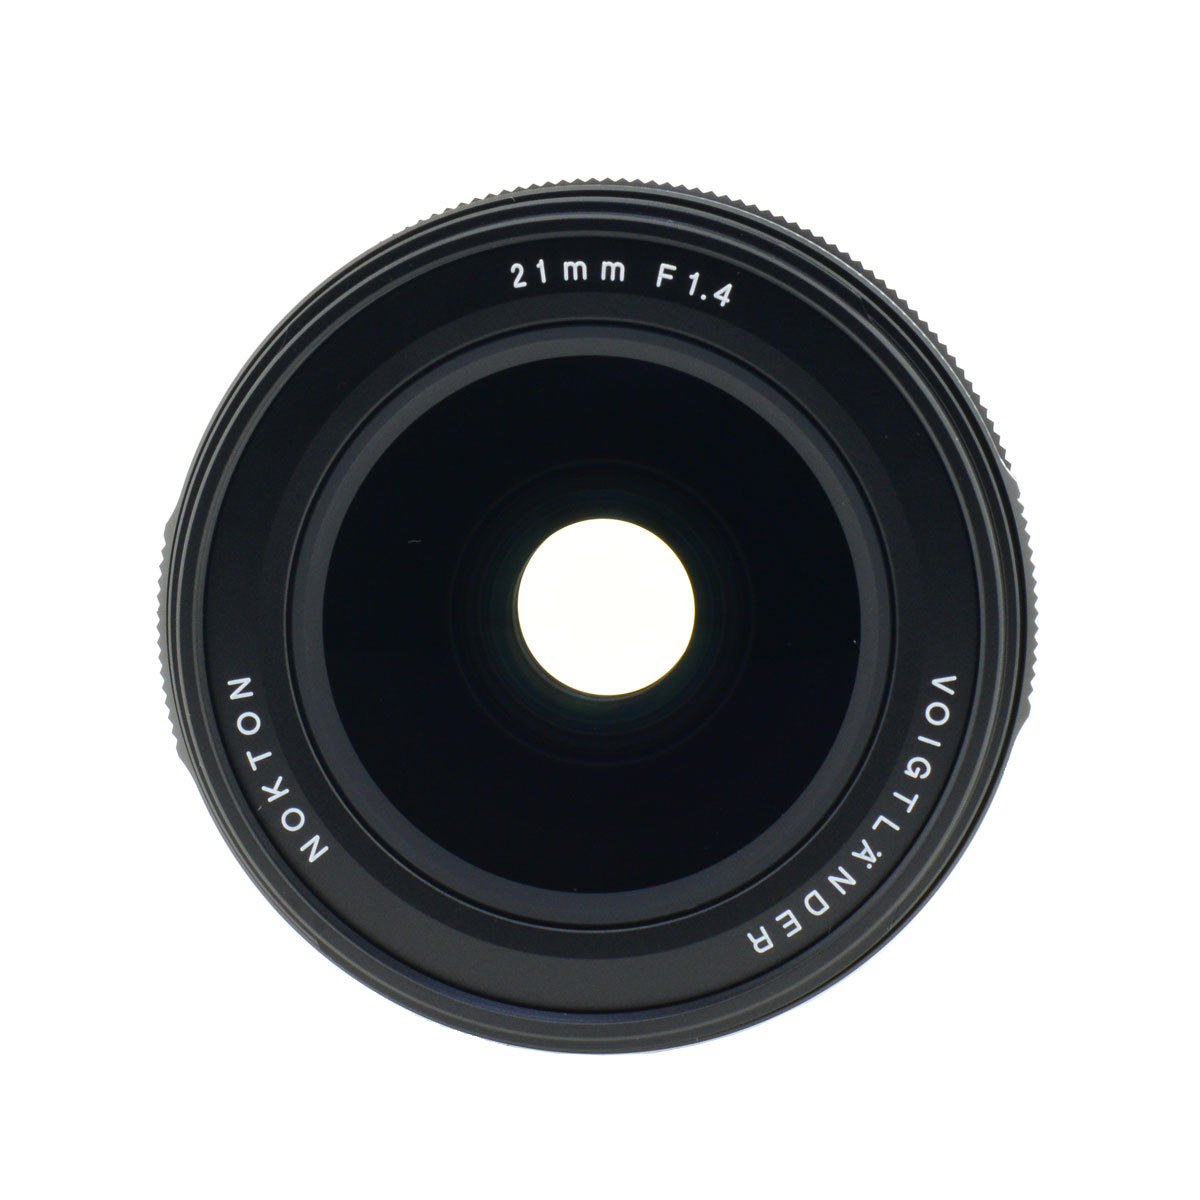 Voigtlaender Nokton 21mm f/1.4 Aspherical Leica-M